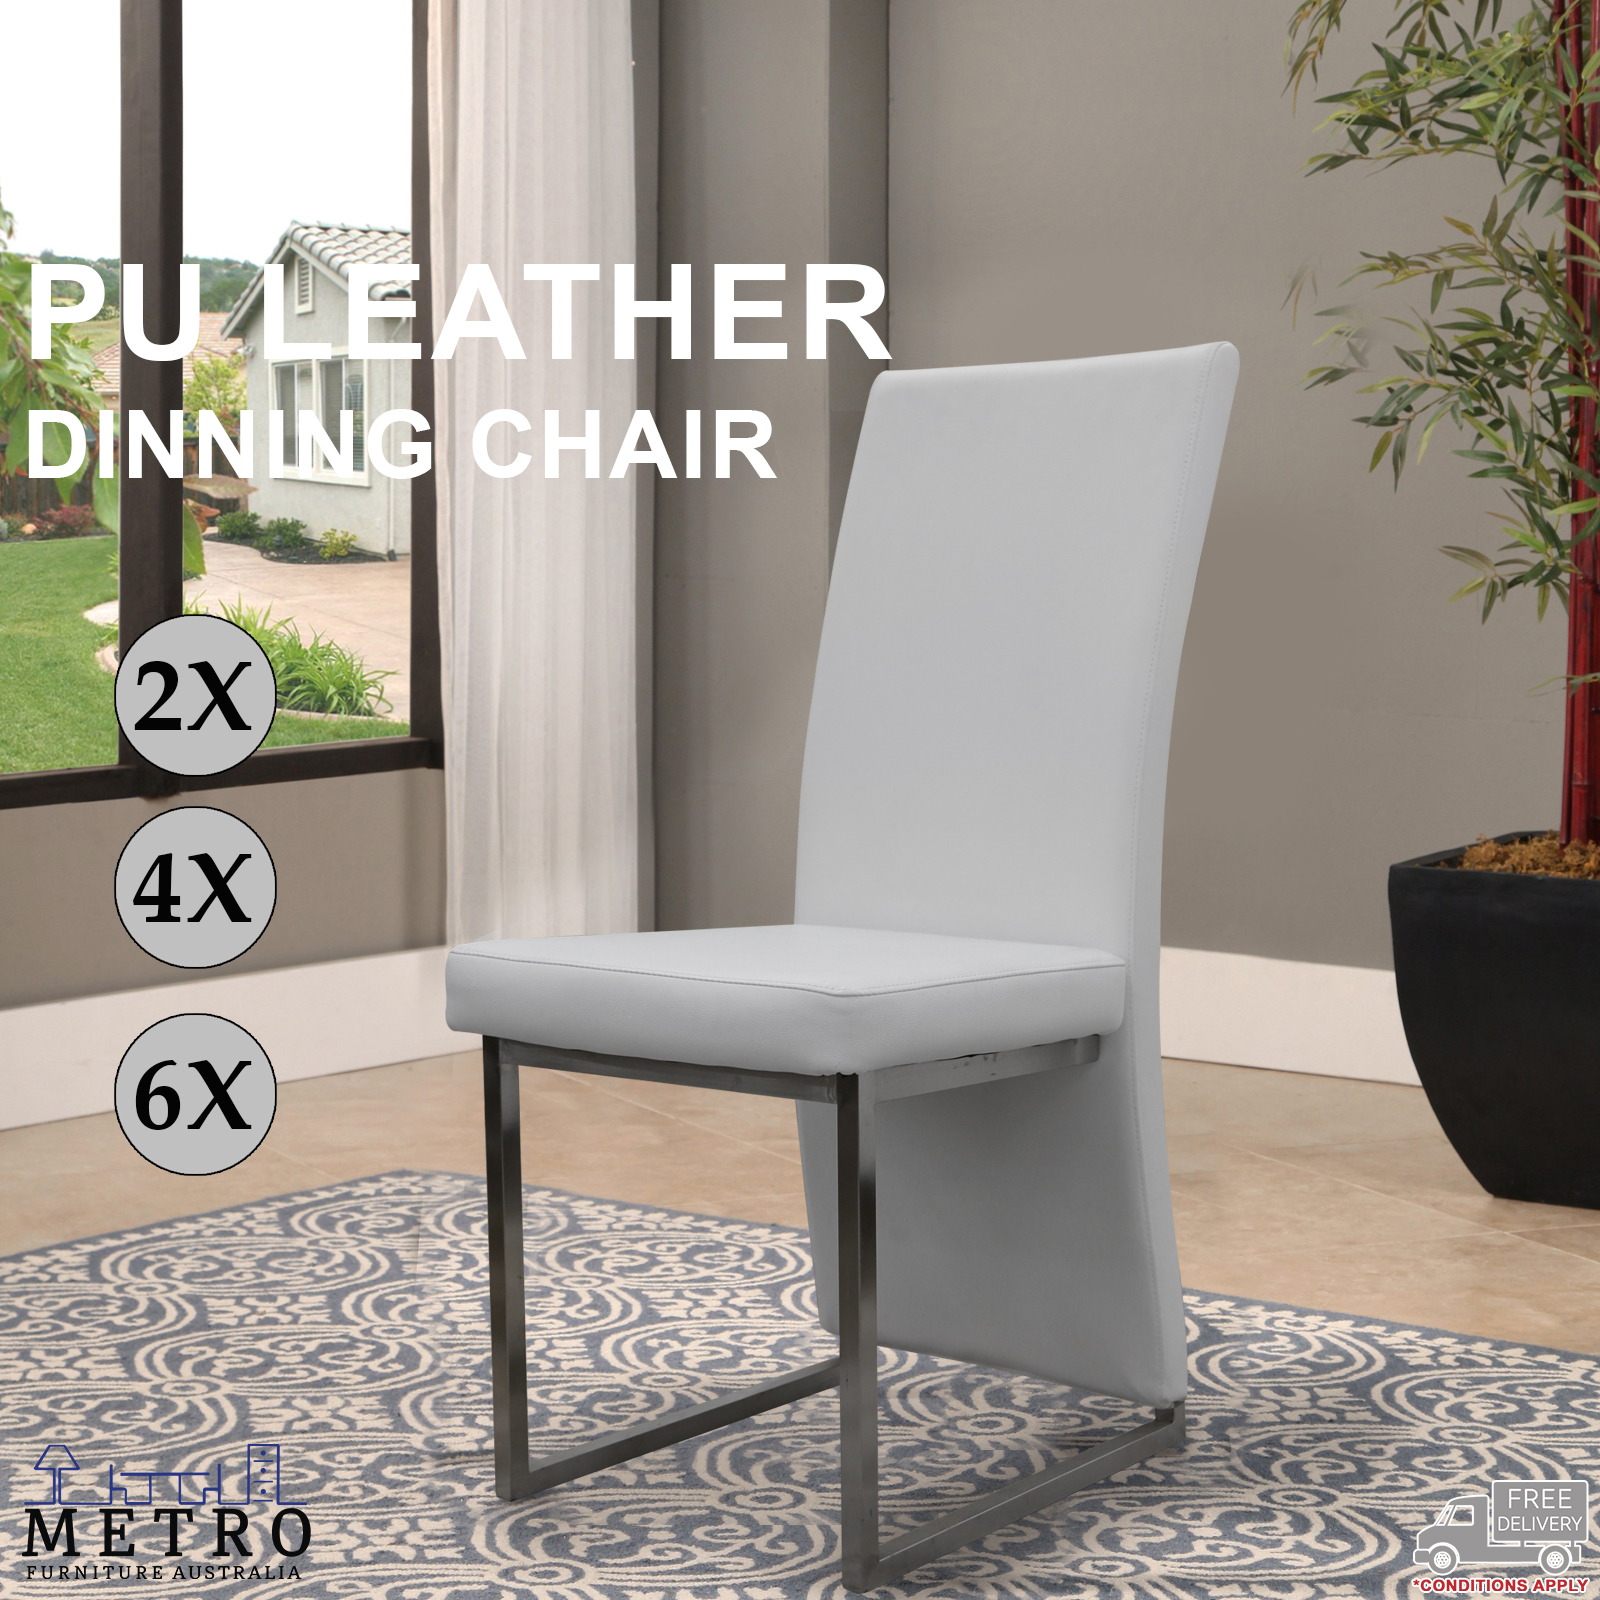 2 4 6 New Luxury Modern Pu Leather Dining Chair White Ebay